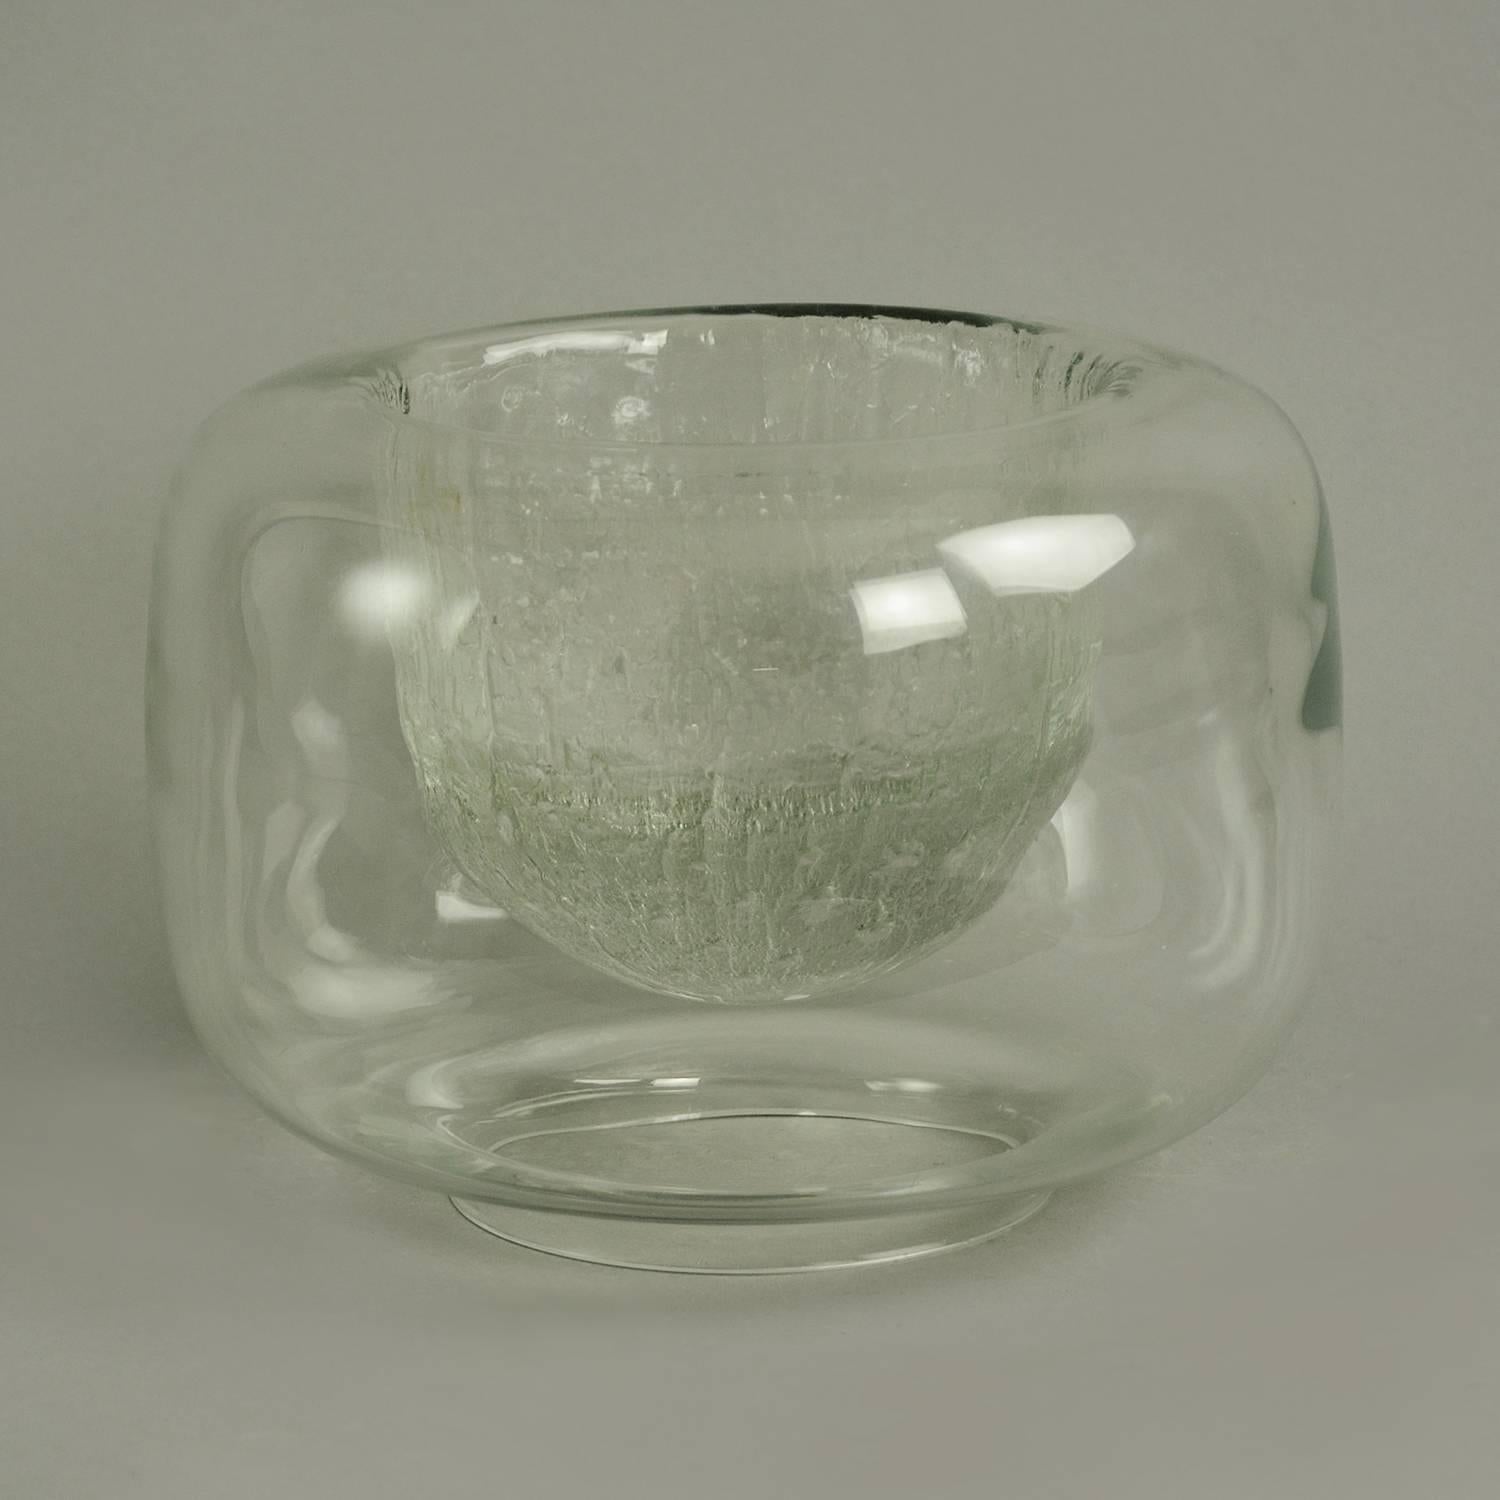 Timo Sarpaneva for Iittala 

Double walled glass vase
Measure: Height 7